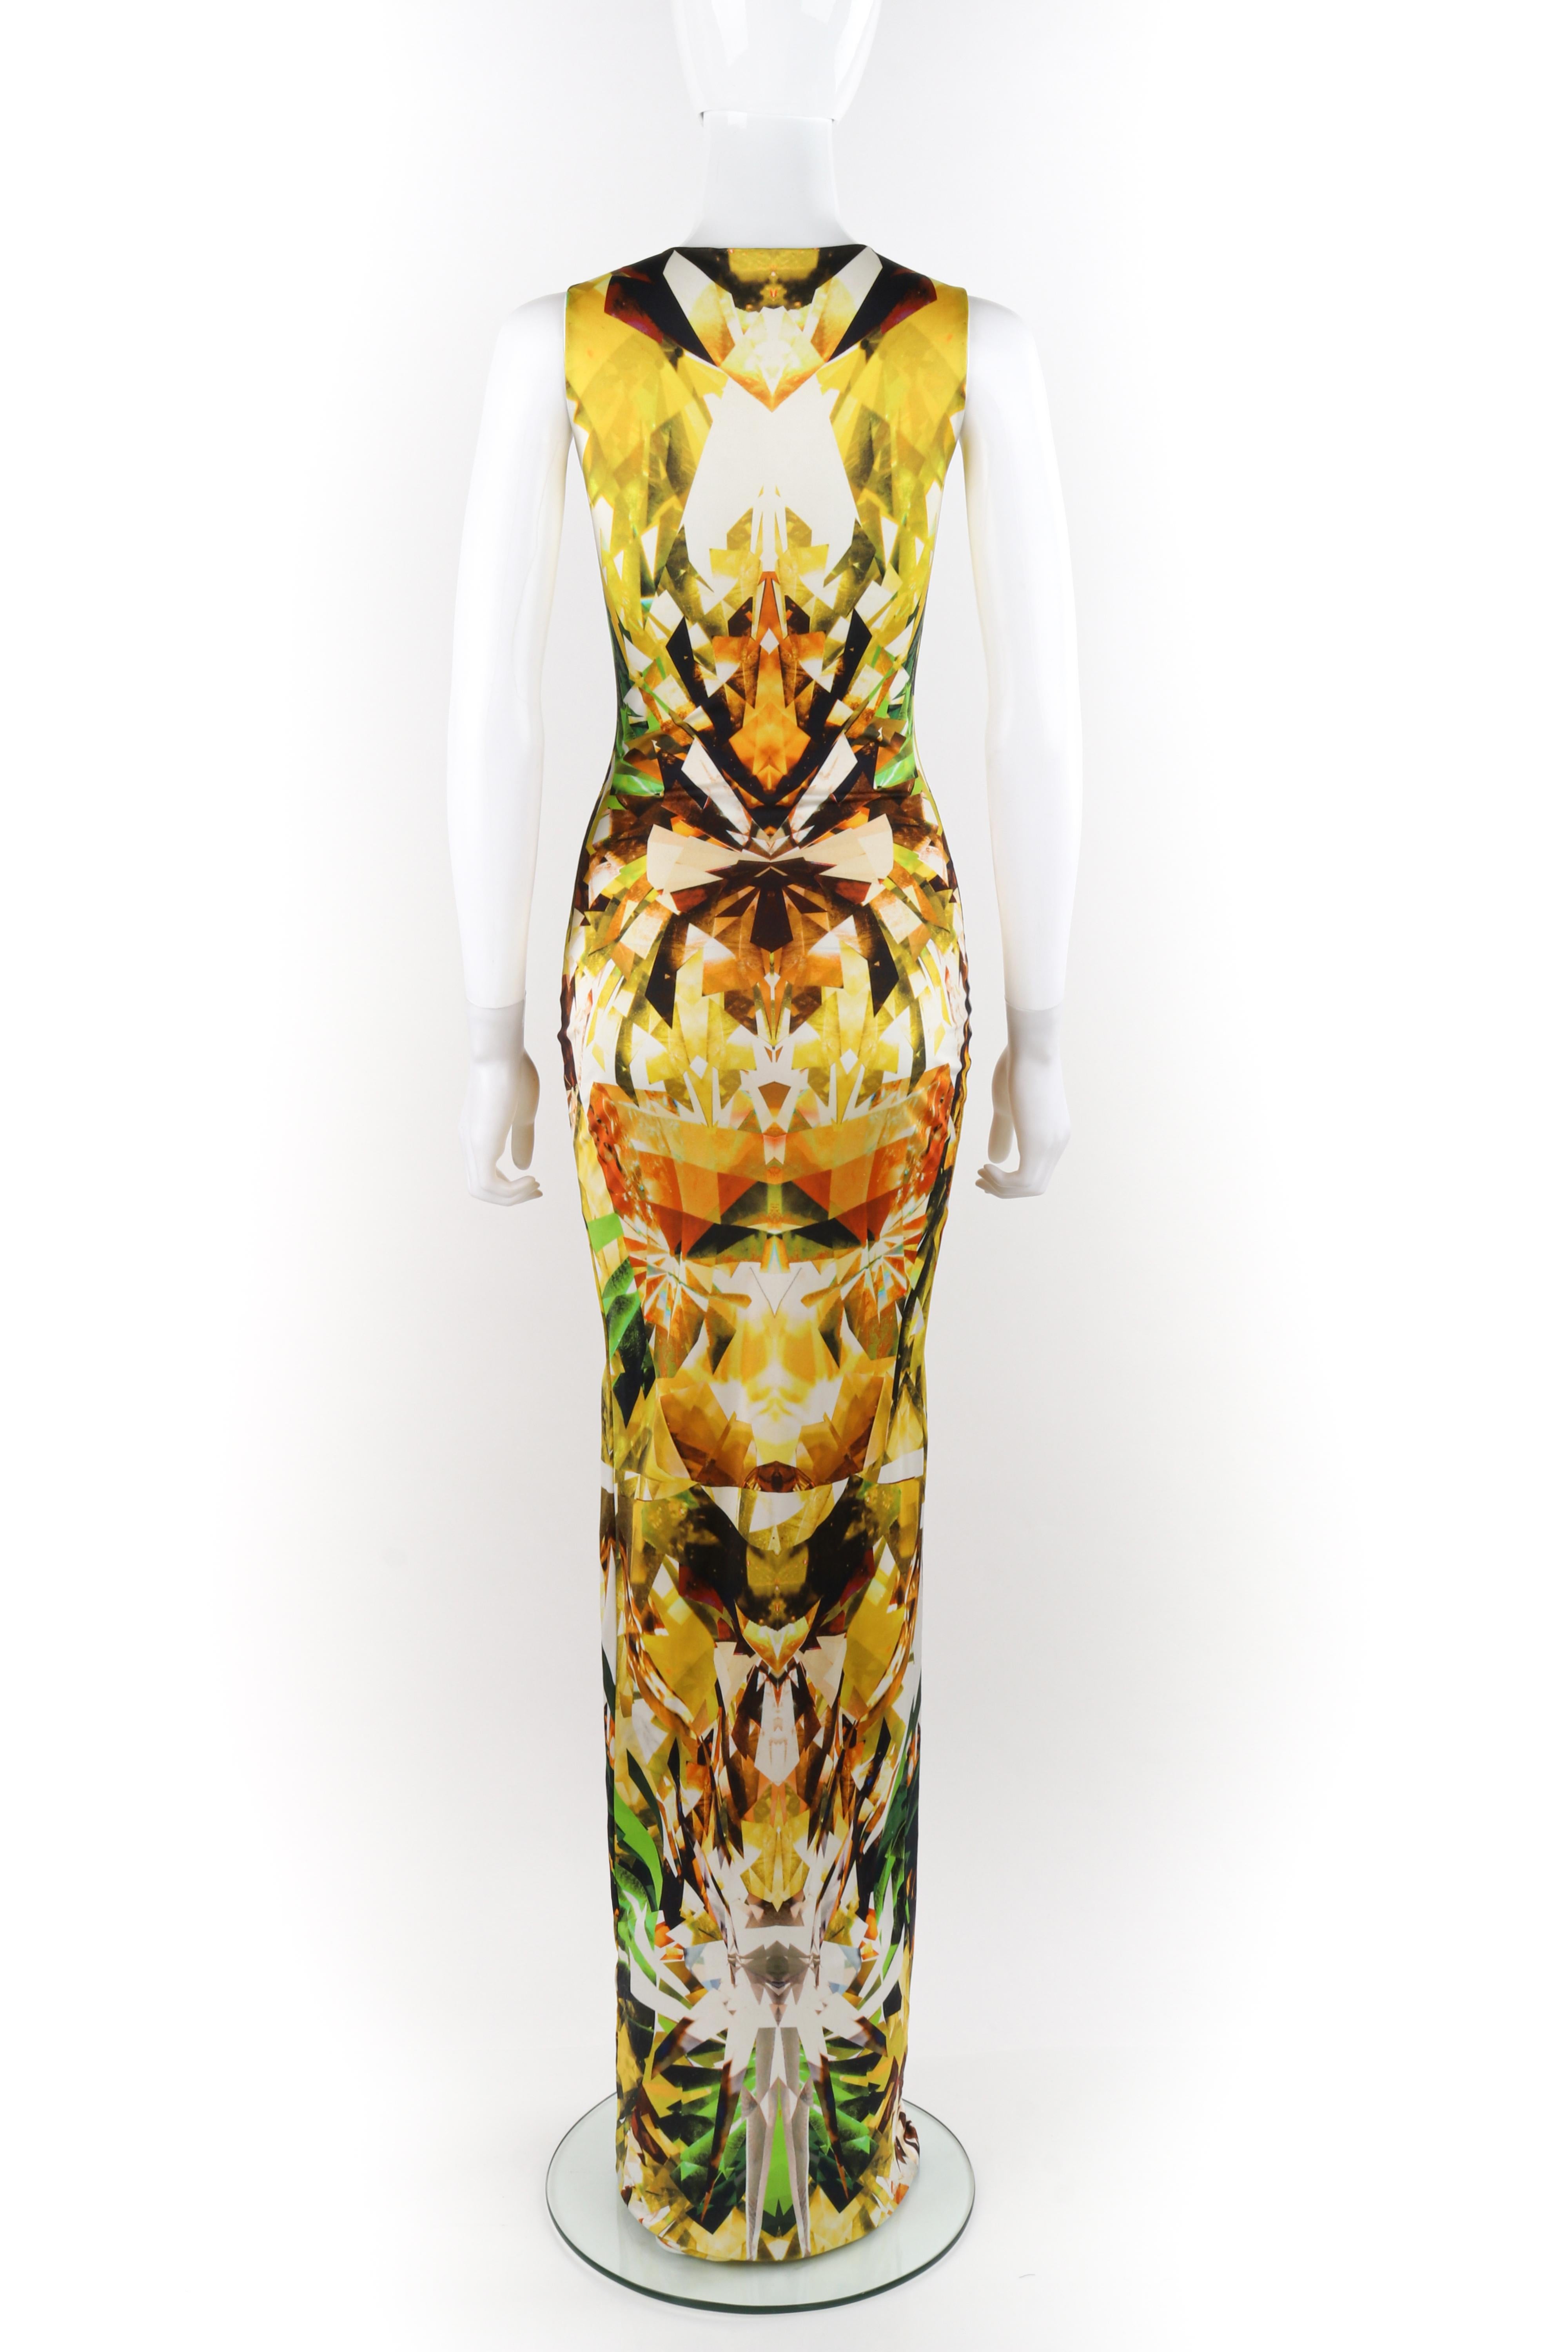 Women's ALEXANDER McQUEEN S/S 2009 “Natural Distinction” Crystal Kaleidoscope Maxi Dress For Sale